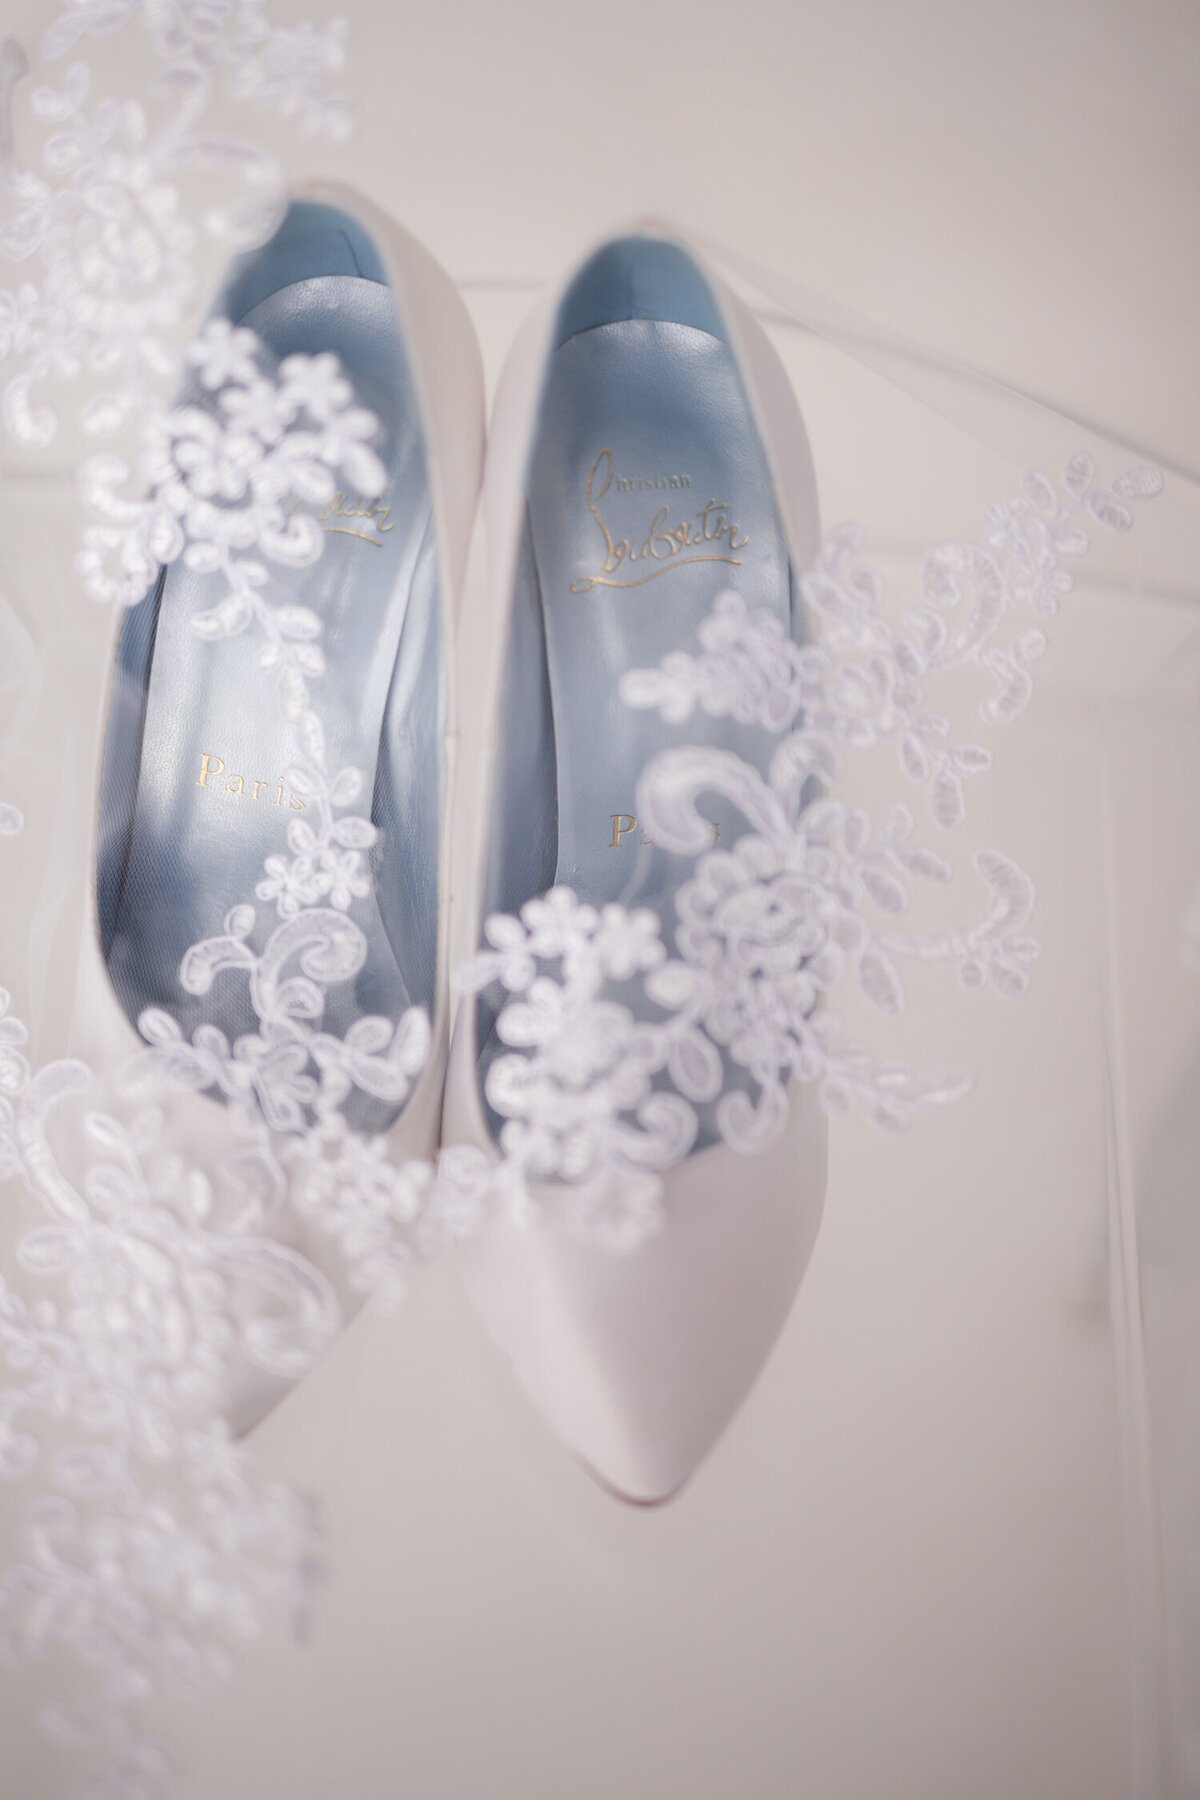 Louboutin Wedding Shoes & French Lace Veil Wedding Detail Shot